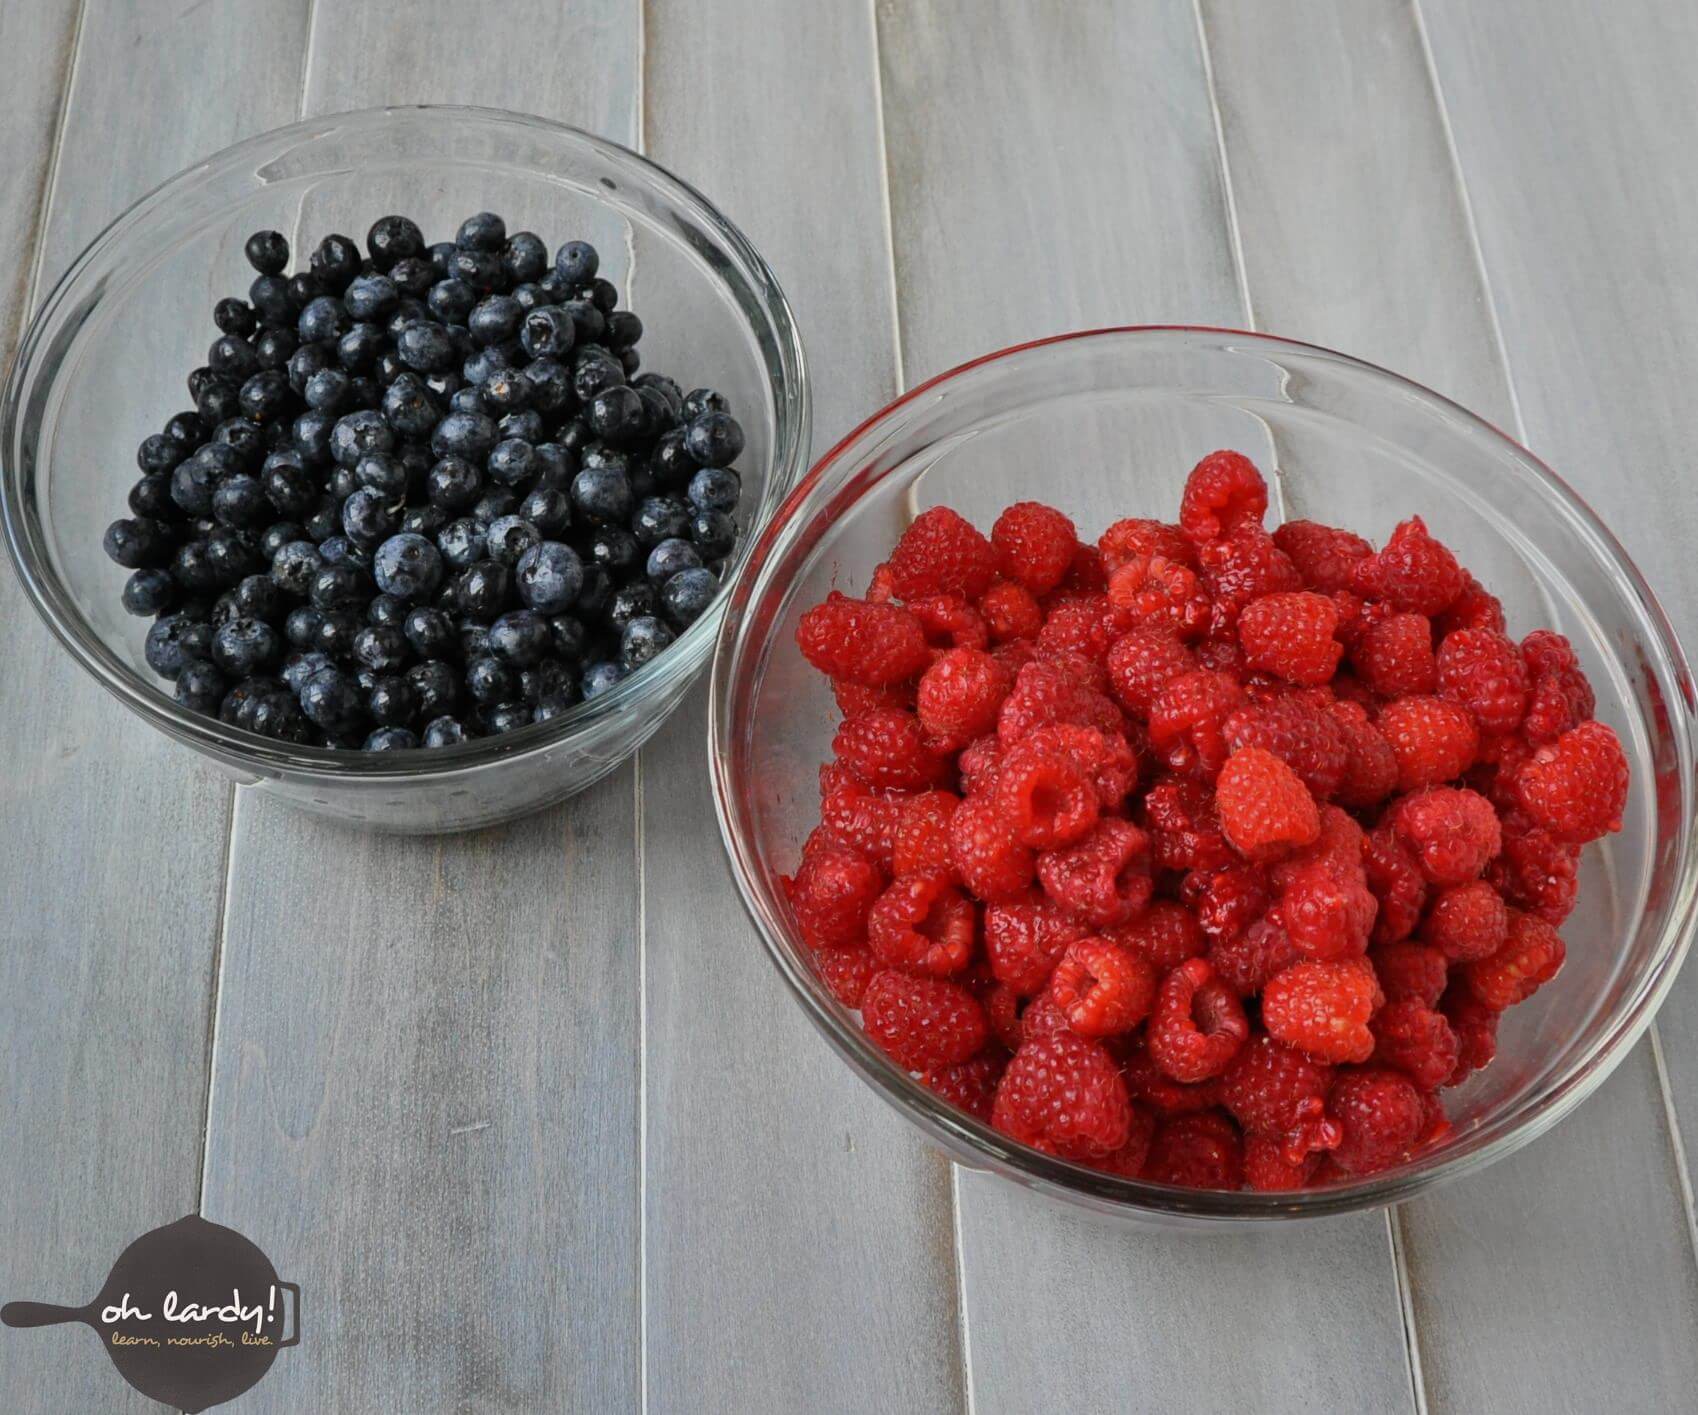 Berries Before Fermentation - Oh Lardy